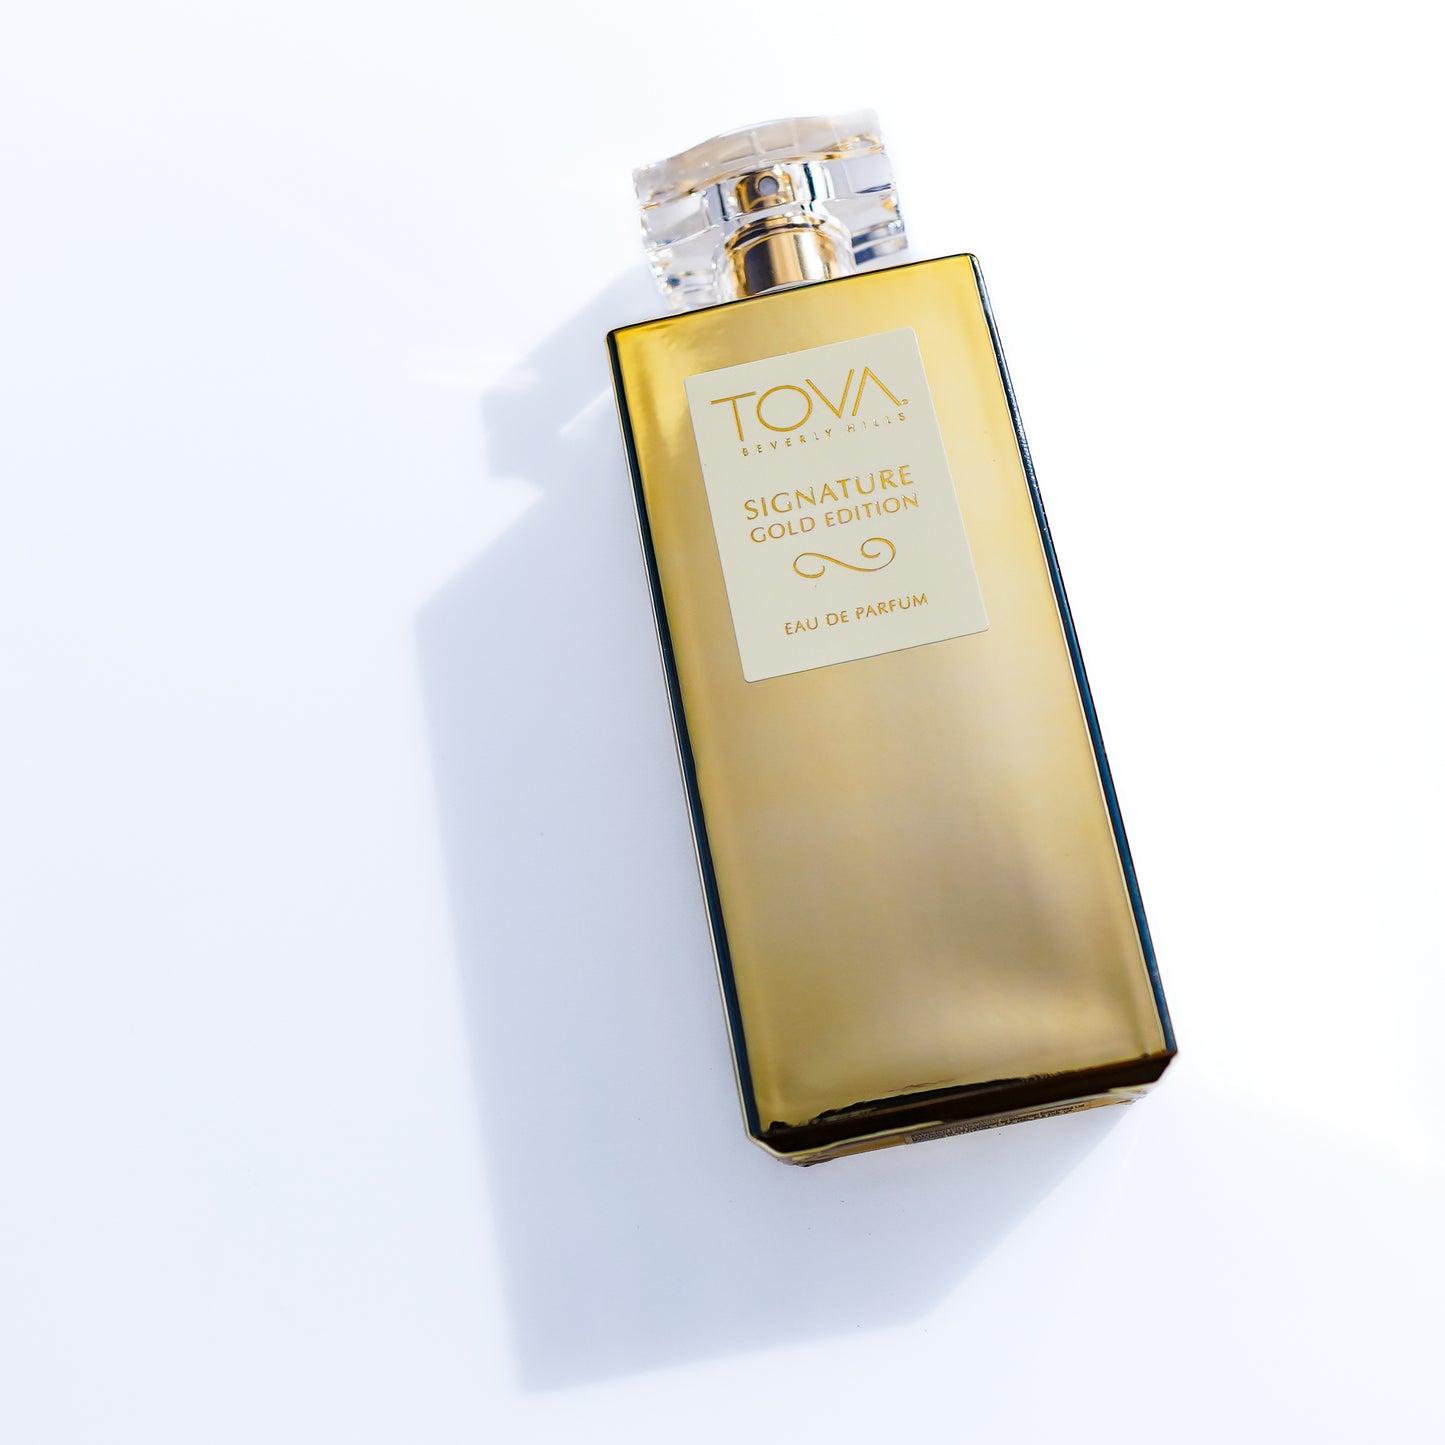 TOVA Signature Special Edition Gold Eau De Parfum